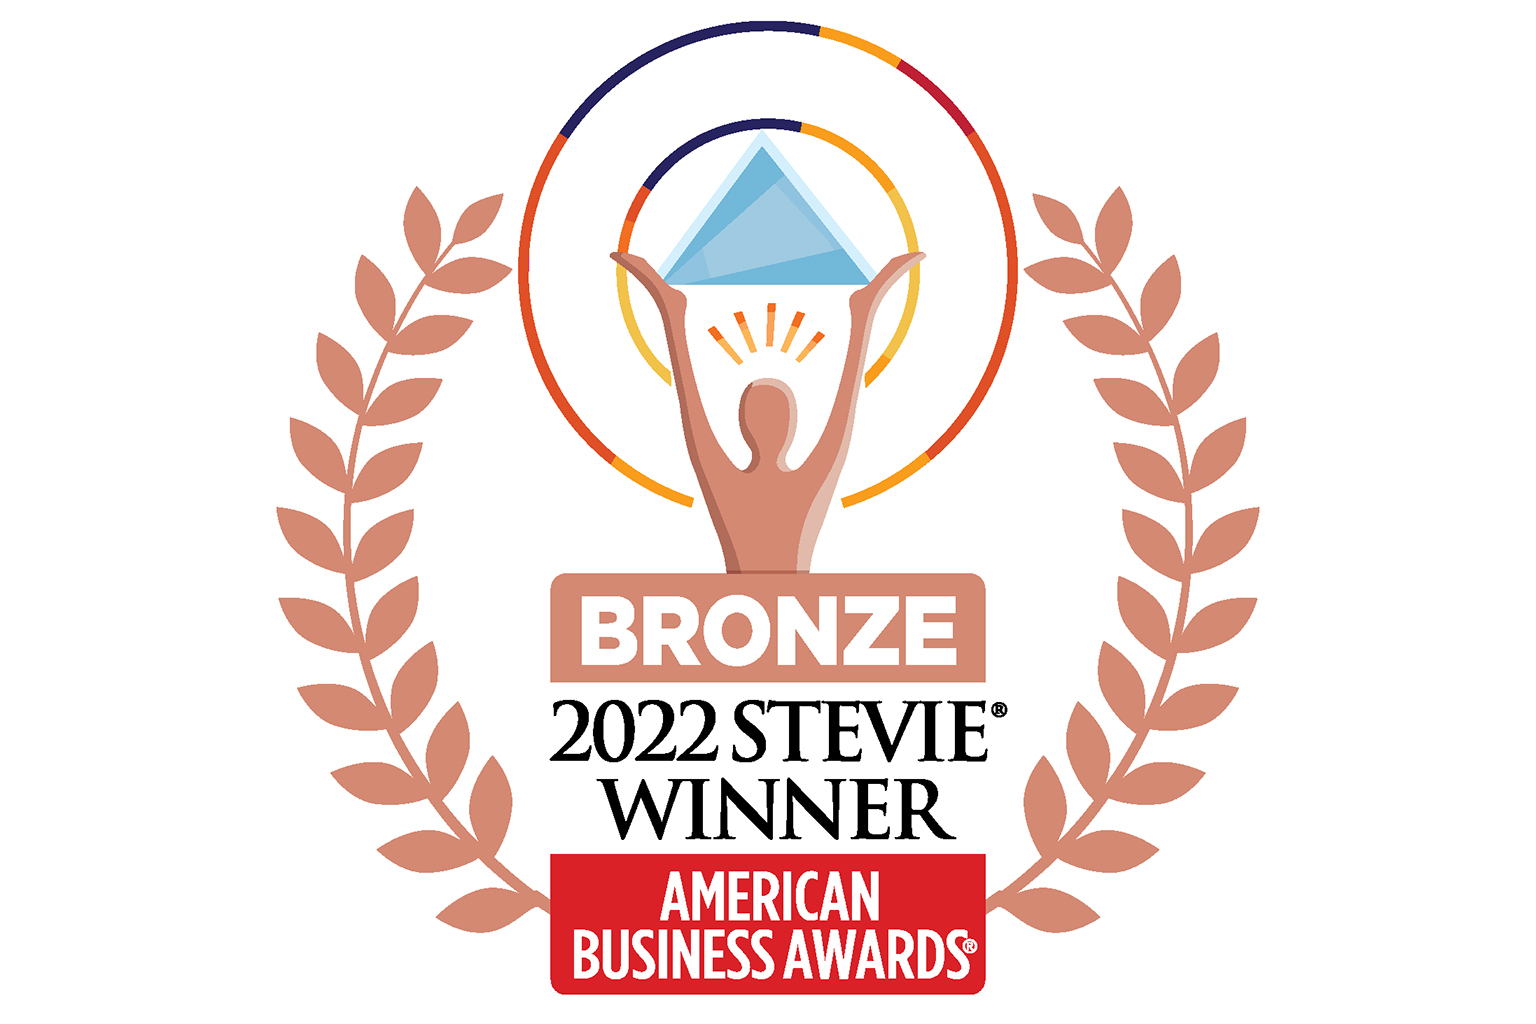 CT Corporation wins bronze Stevie Award